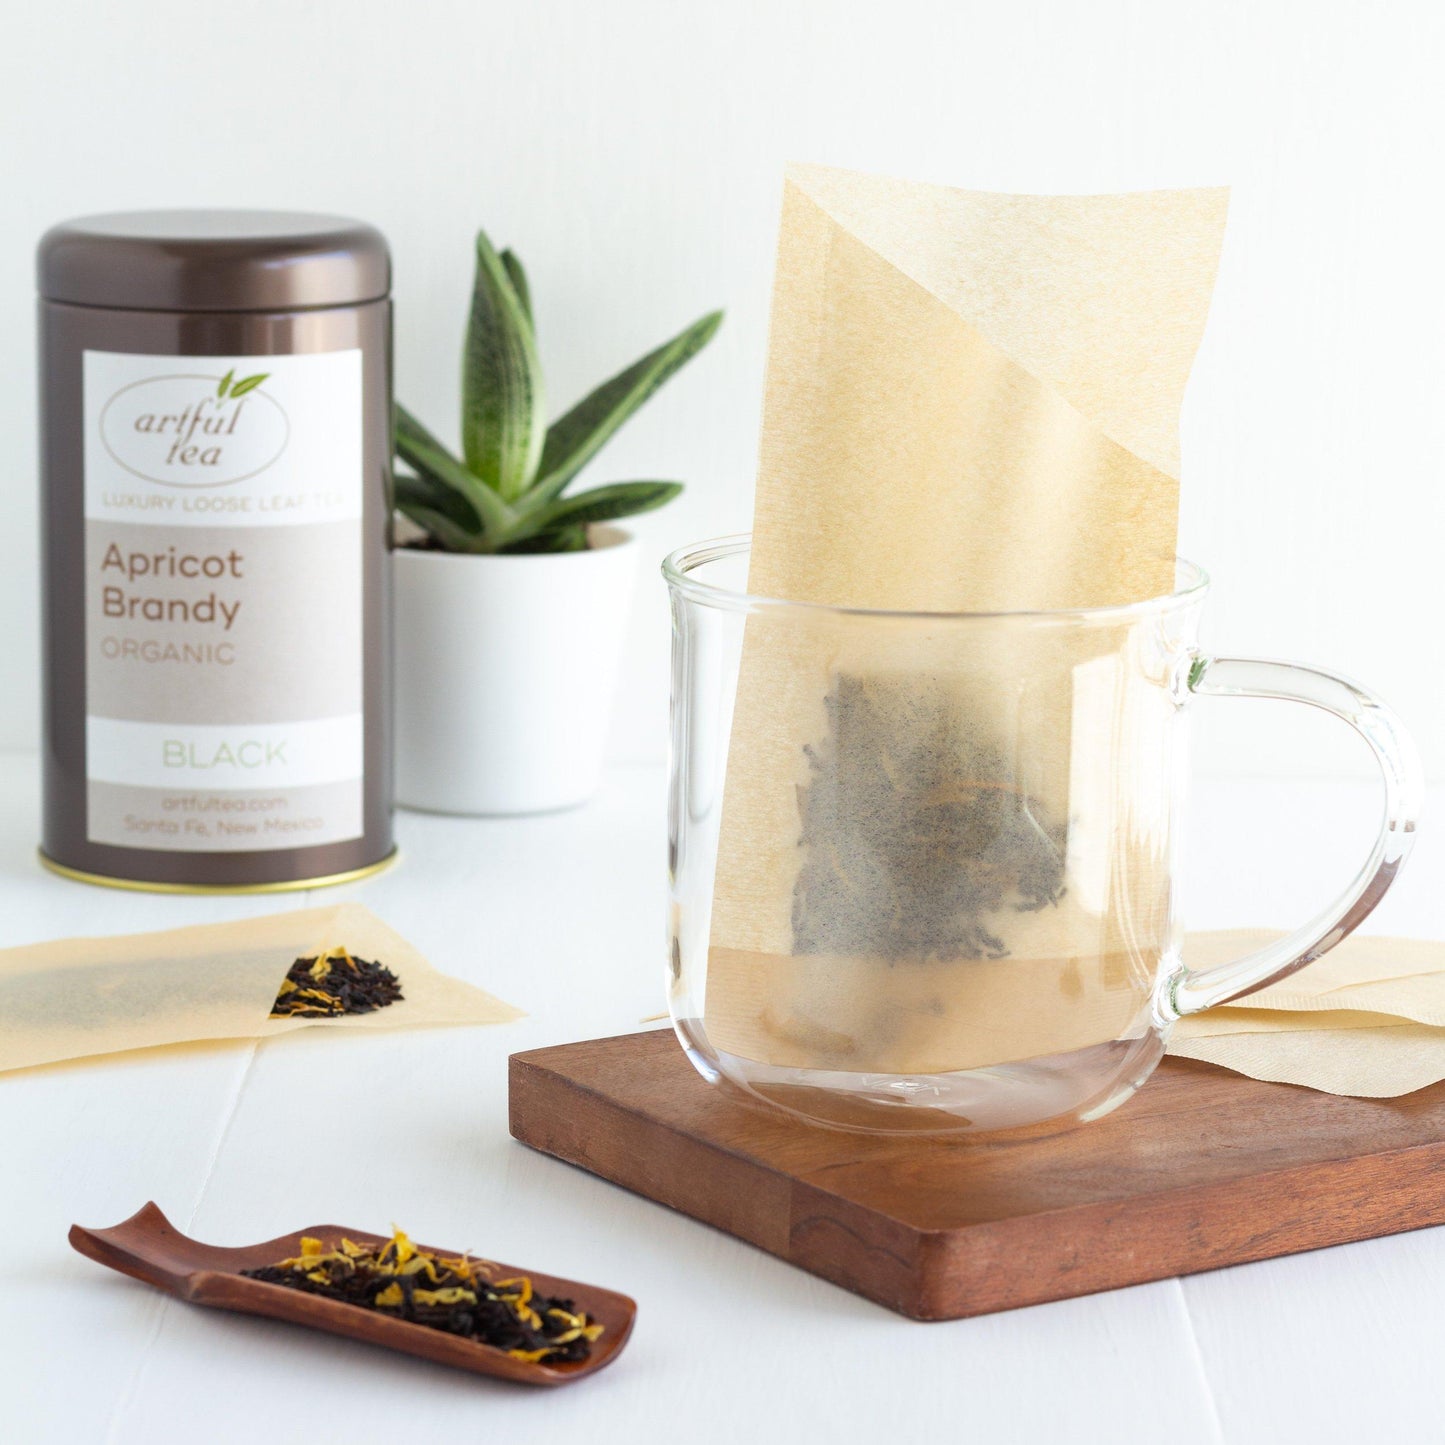 Tea Filter standing in glass mug